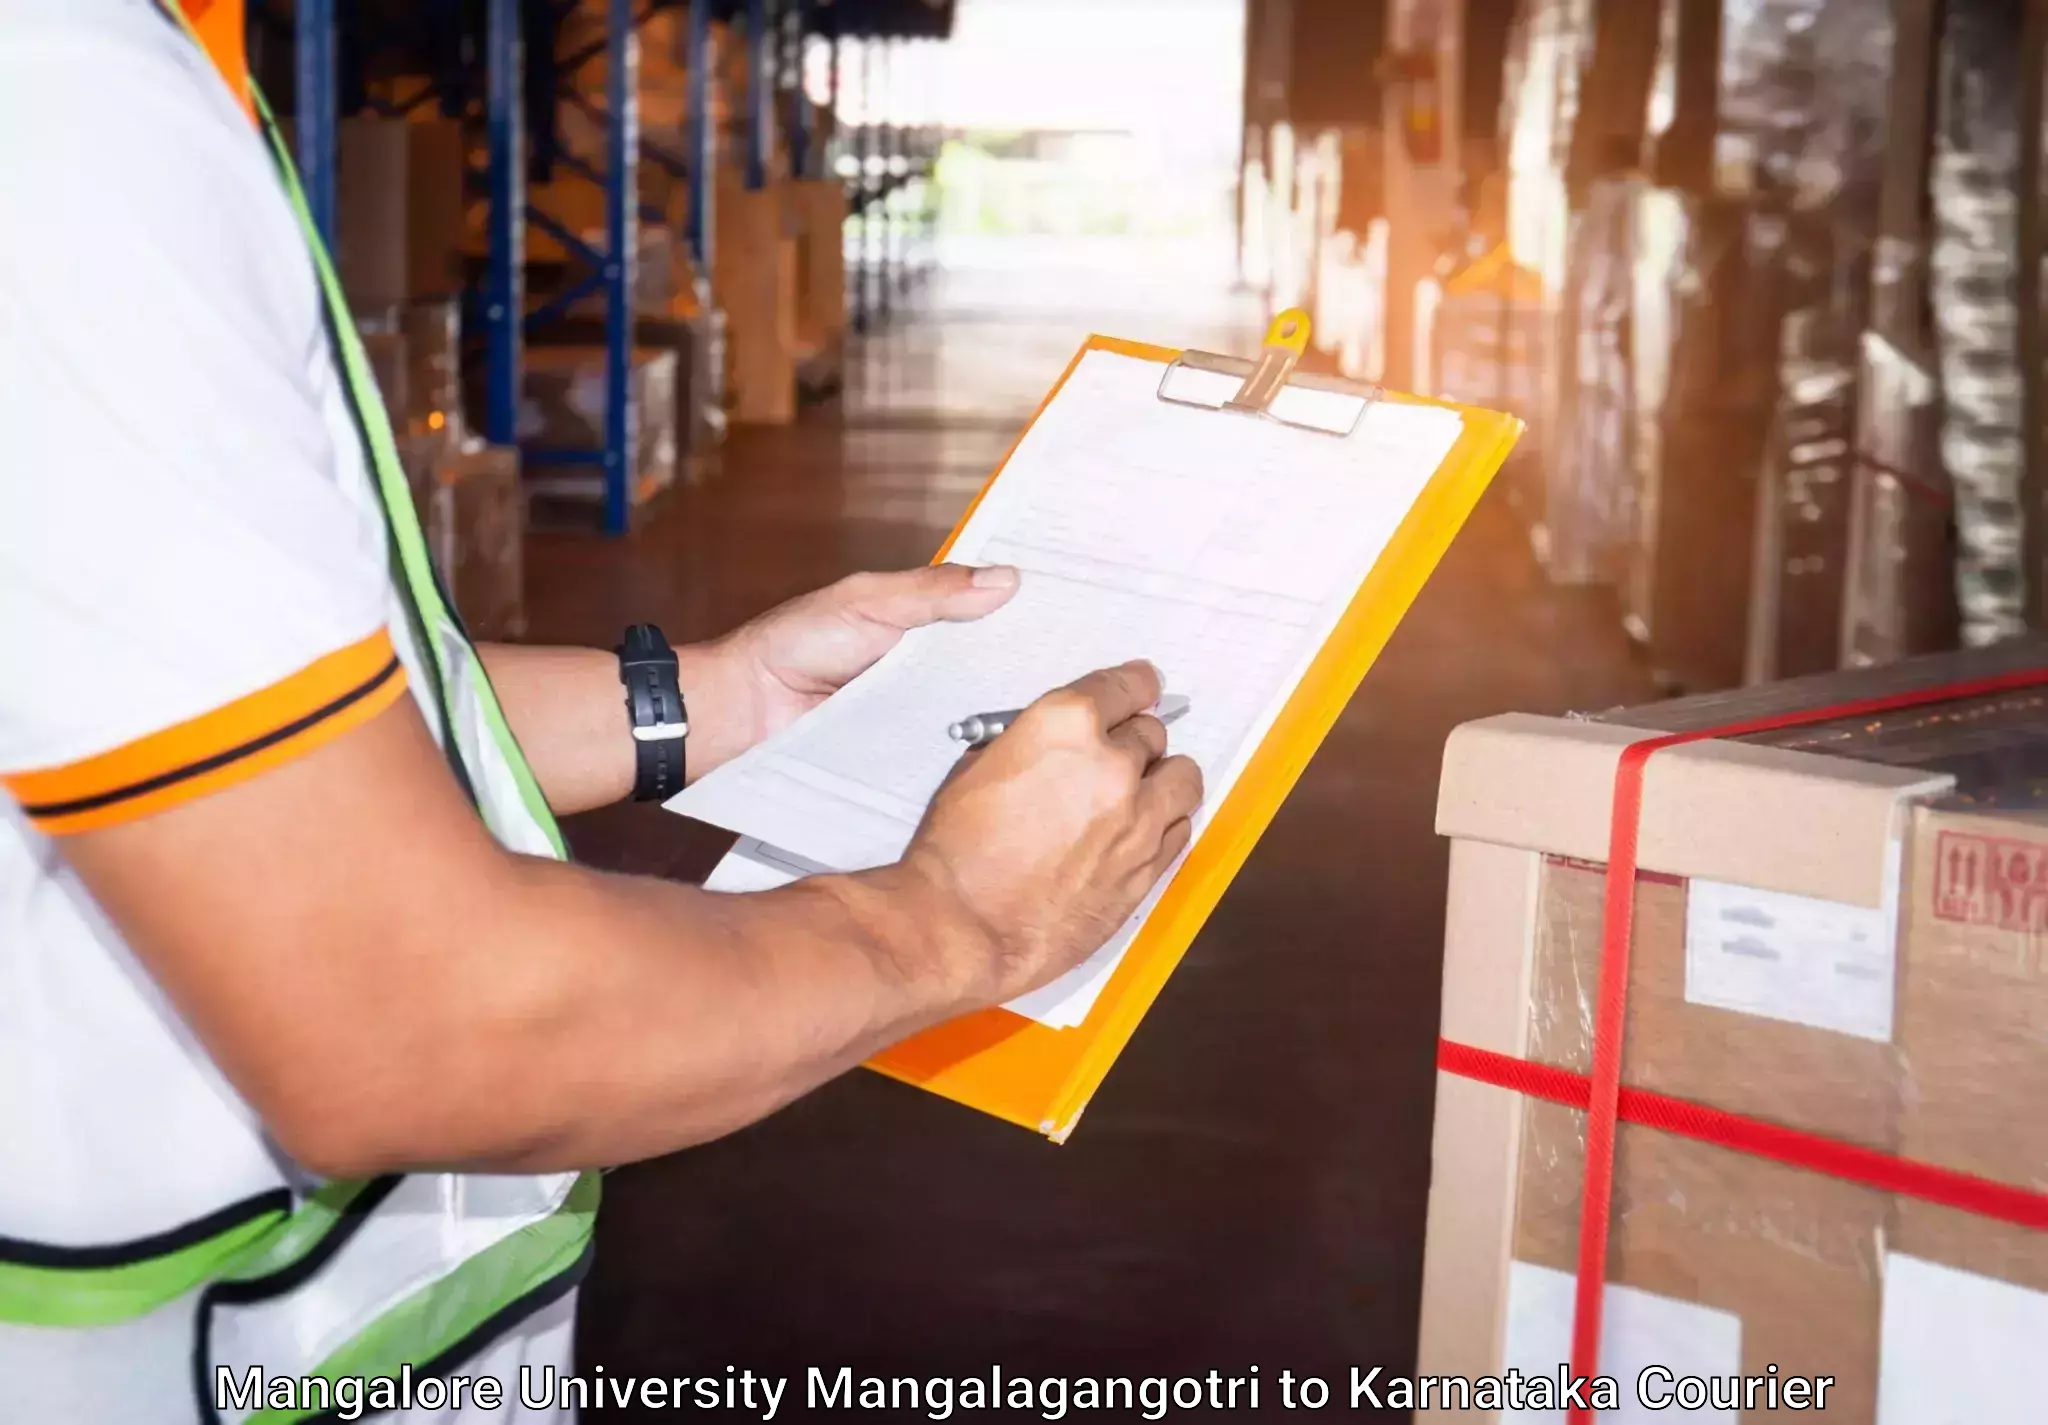 Door-to-door baggage service Mangalore University Mangalagangotri to Belgaum